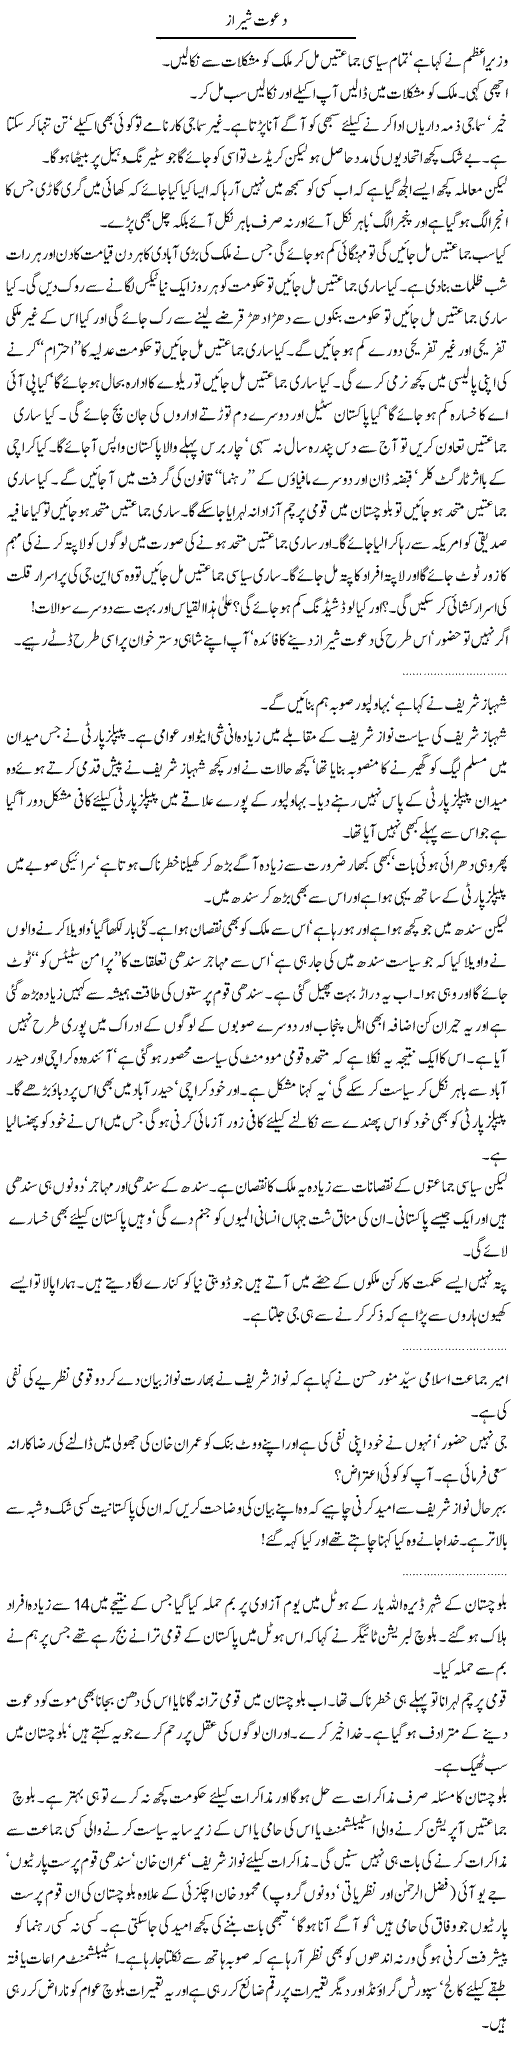 Bahawalpur Province Express Column Abdullah Tariq 16 August 2011